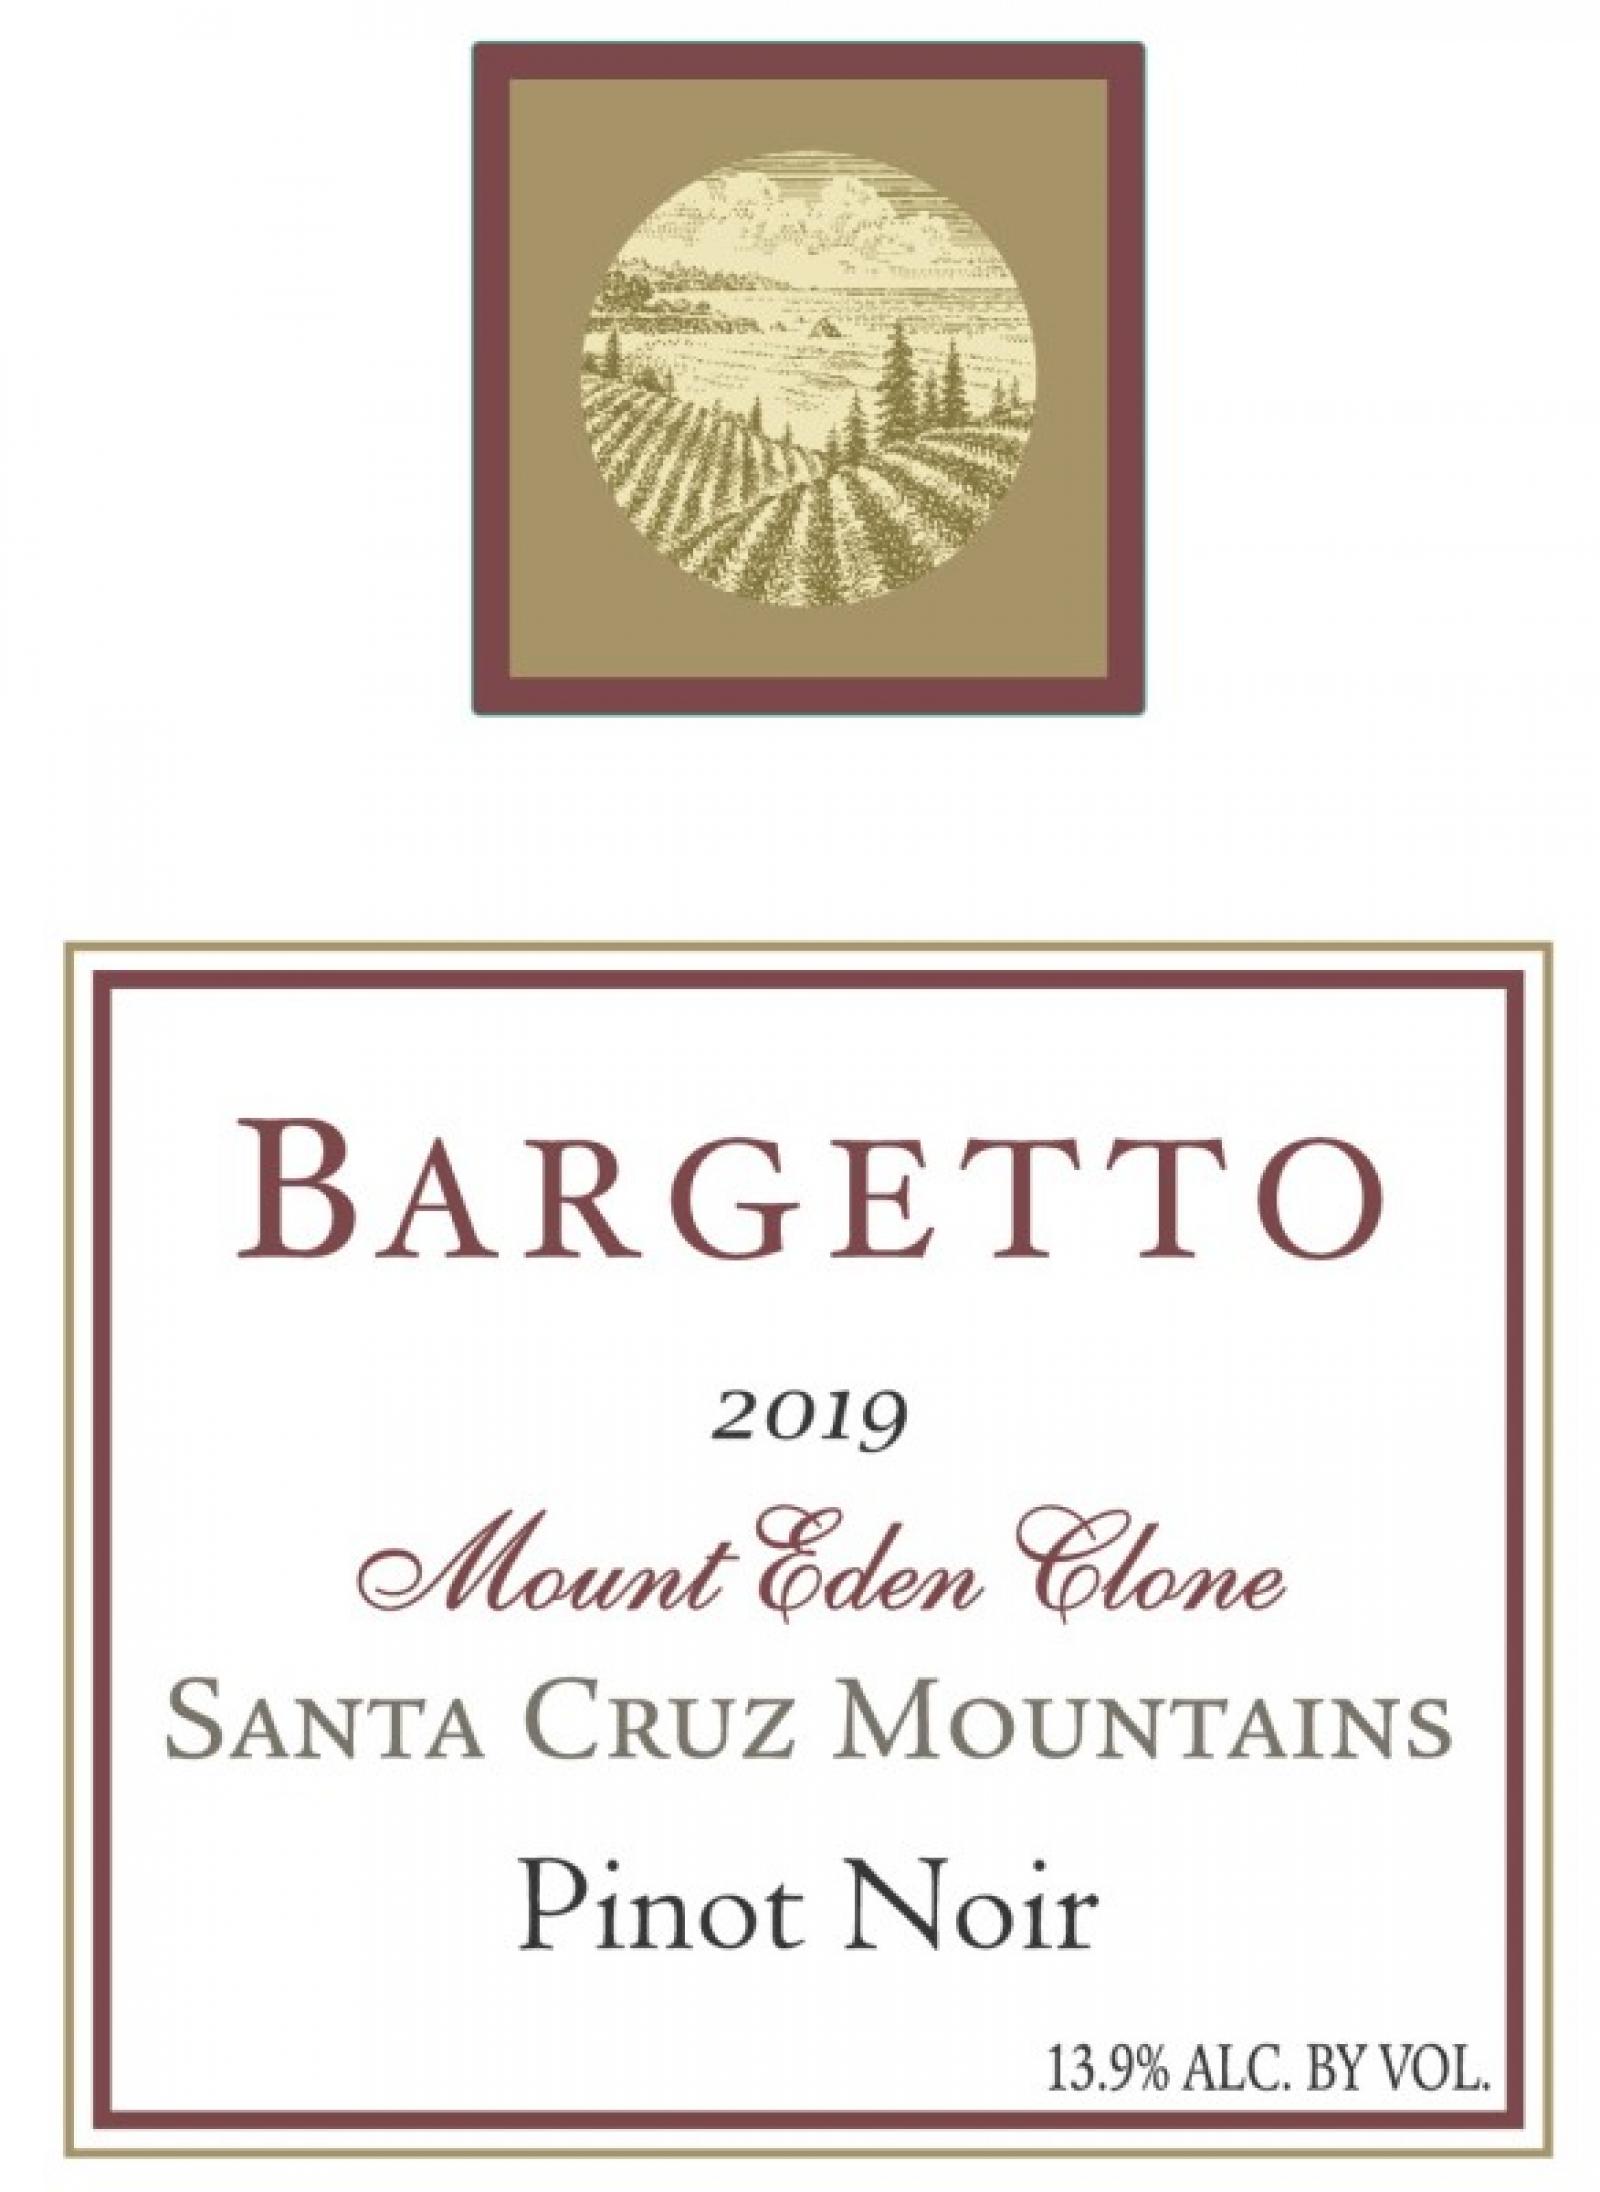 Bargetto Pinot Noir Mt. Eden Clone 2019